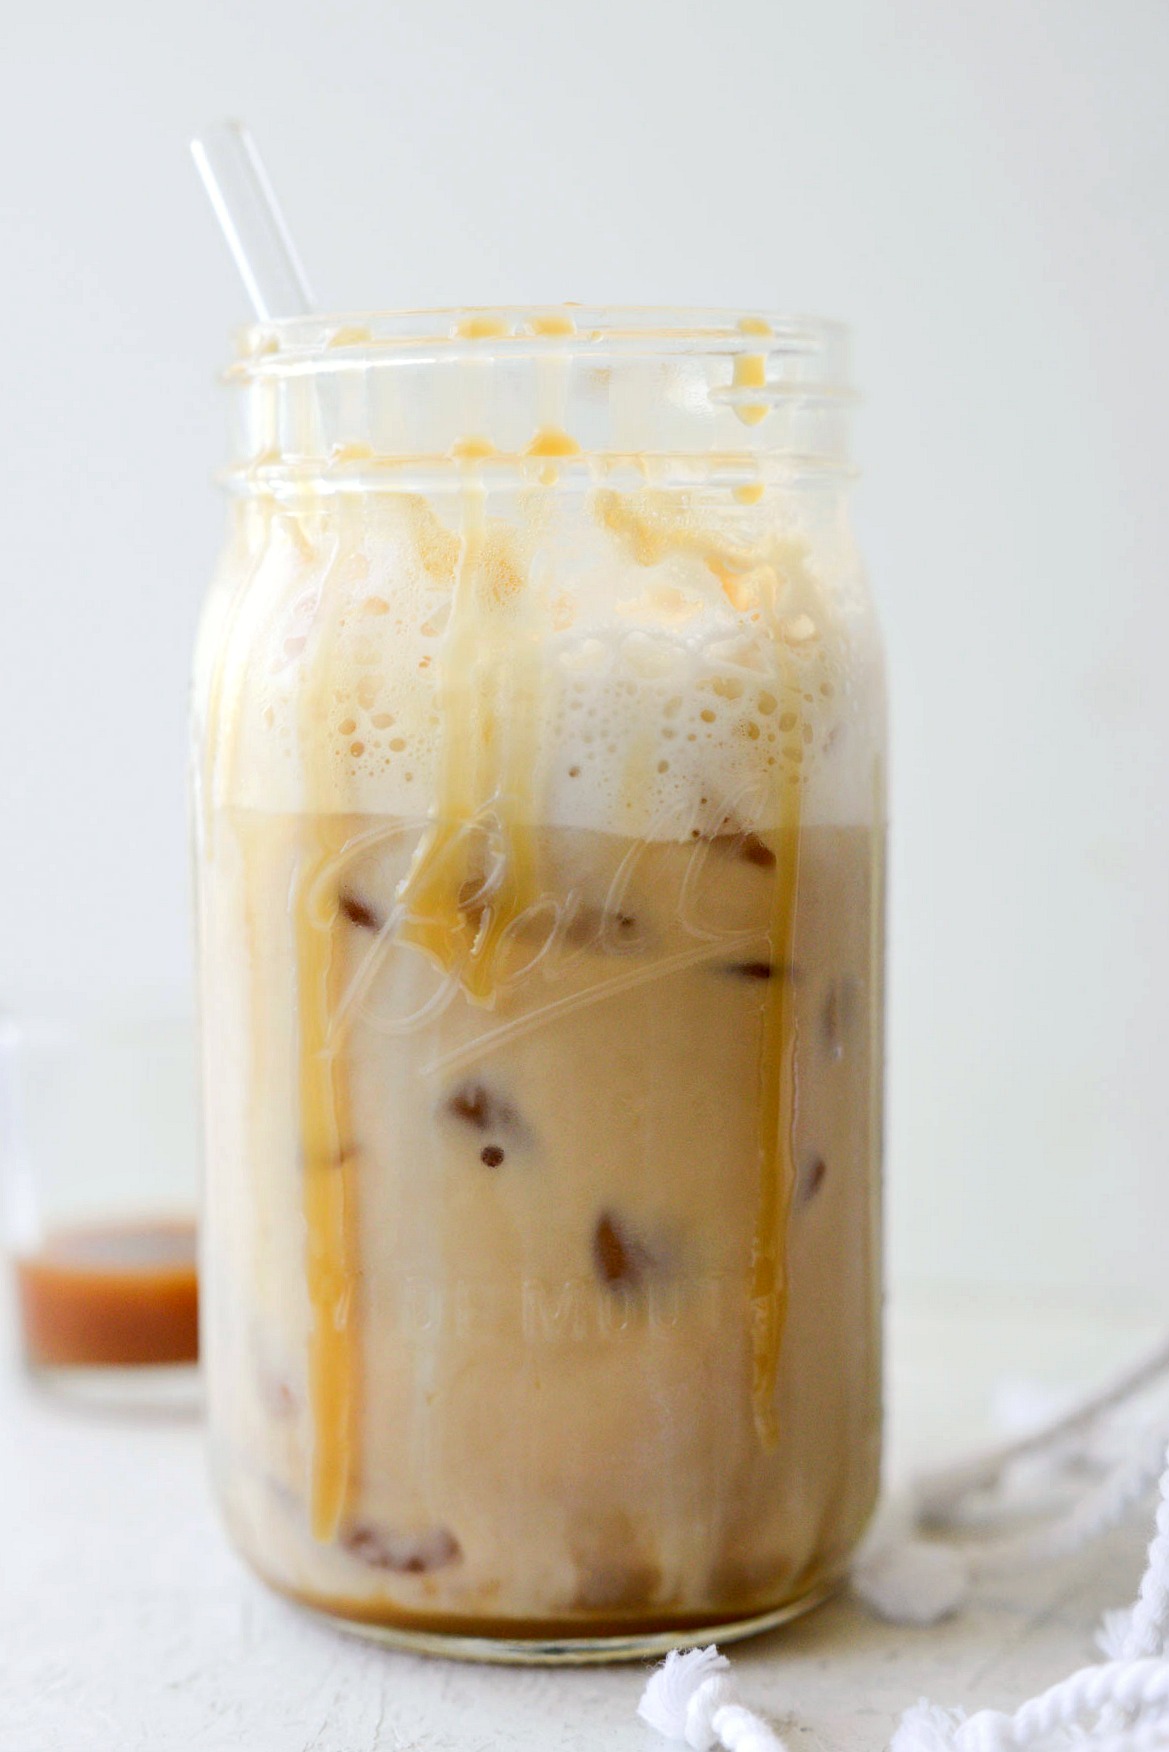 https://www.simplyscratch.com/wp-content/uploads/2020/06/Iced-Caramel-Vanilla-Latte-l-SimplyScratch.com-iced-coffee-caramel-vanilla-keurig-notsponsored-espresso-latte-13.jpg